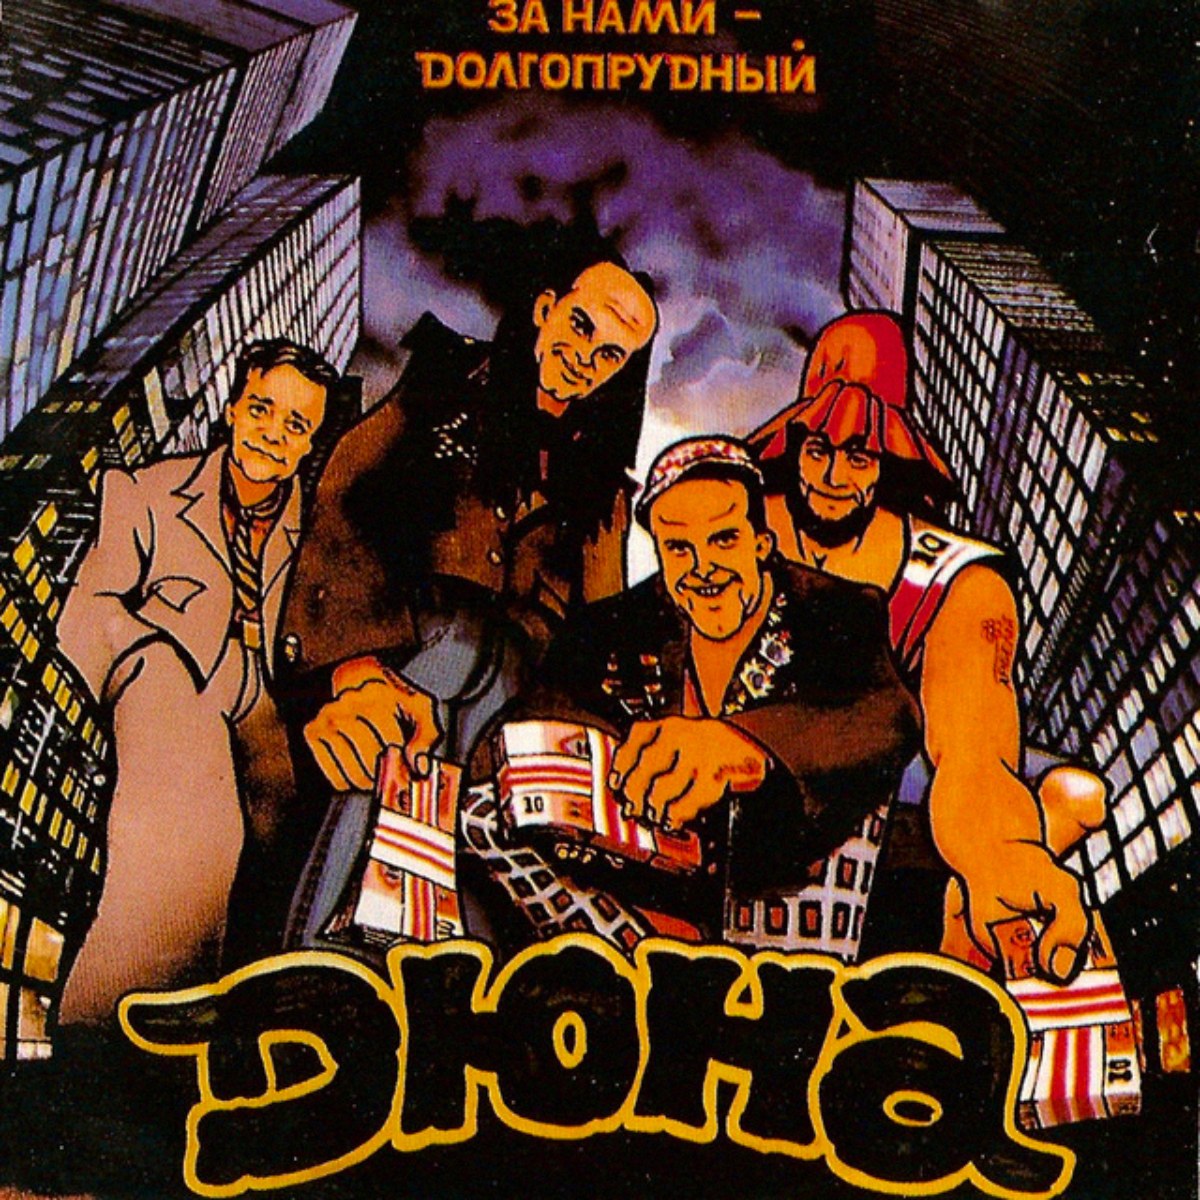 “Behind us Dolgoprudny” (cover of the Dune album)